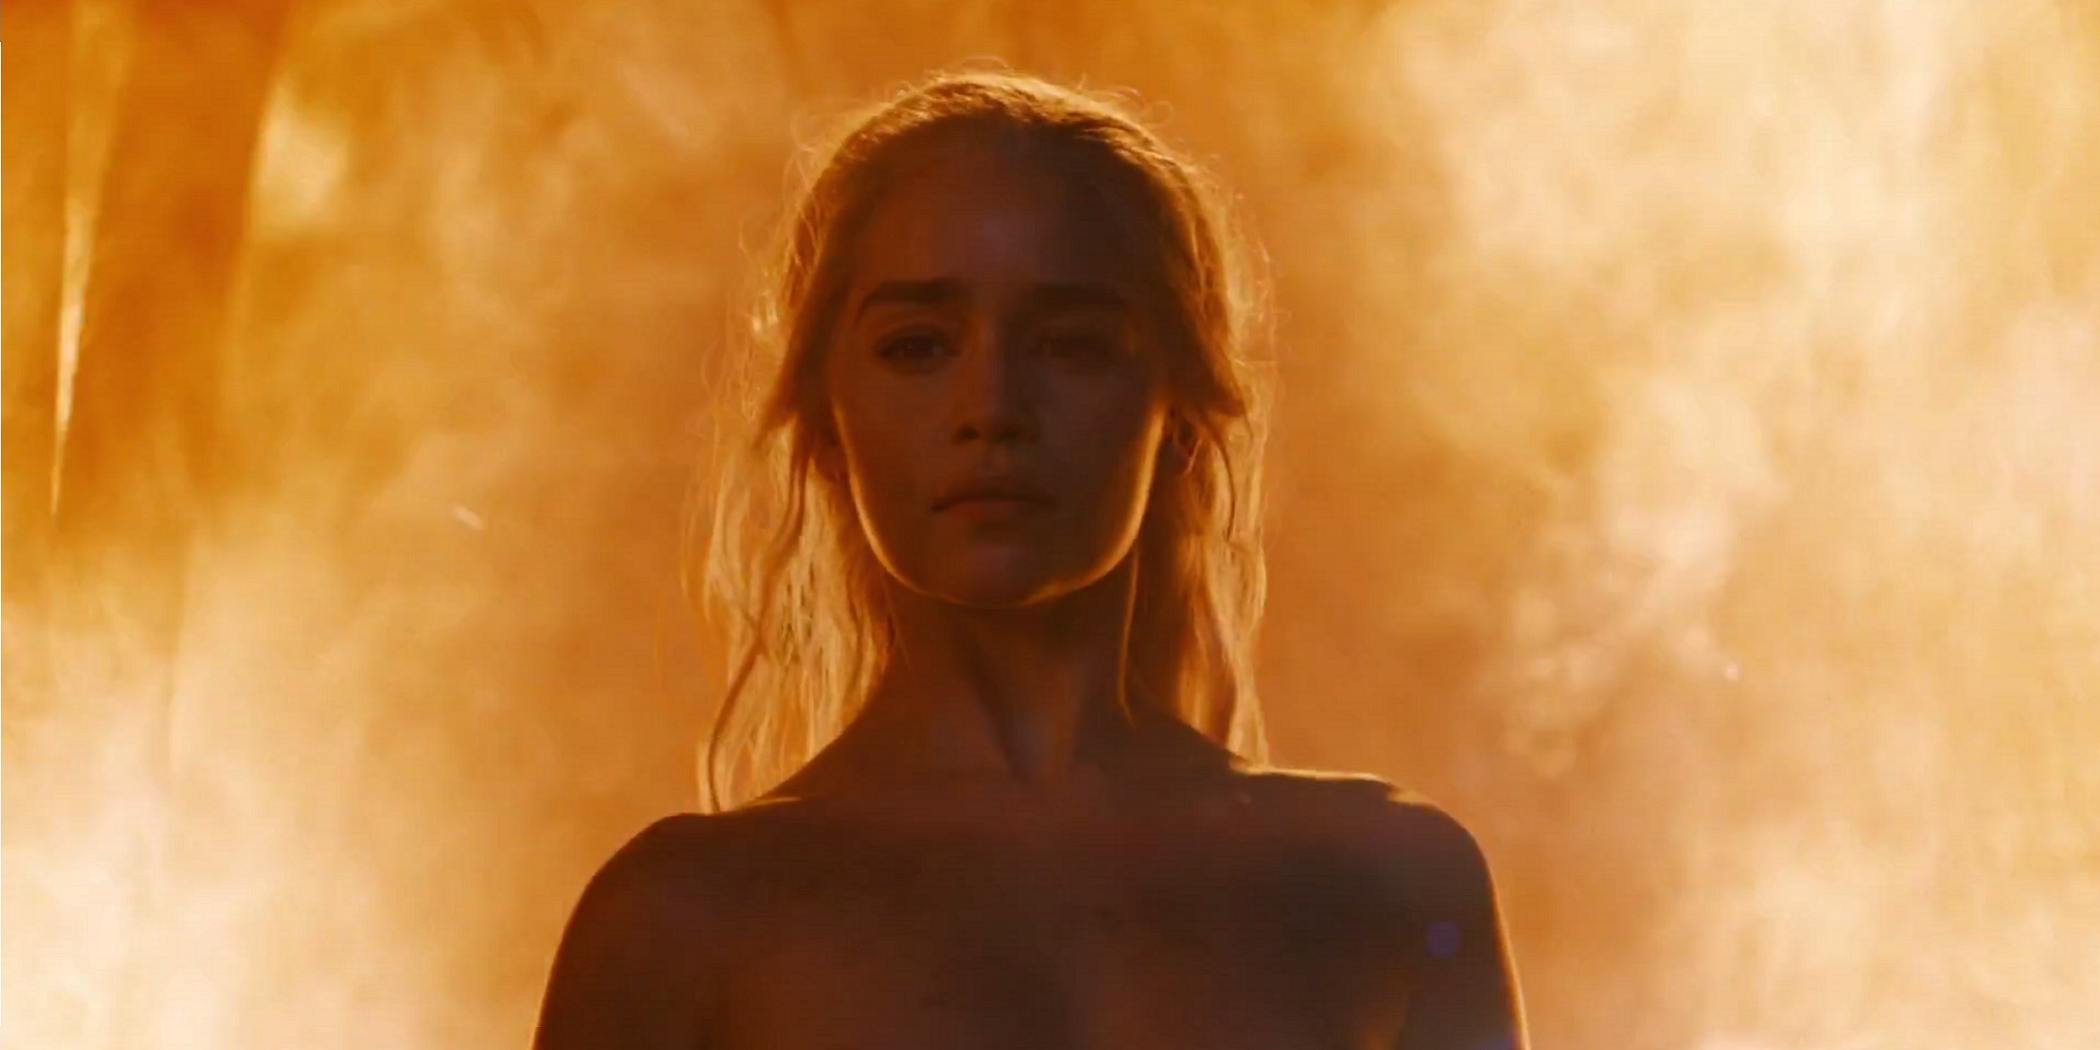 Daenerys Targaryen unburnt in Season 6 of Game of Thrones